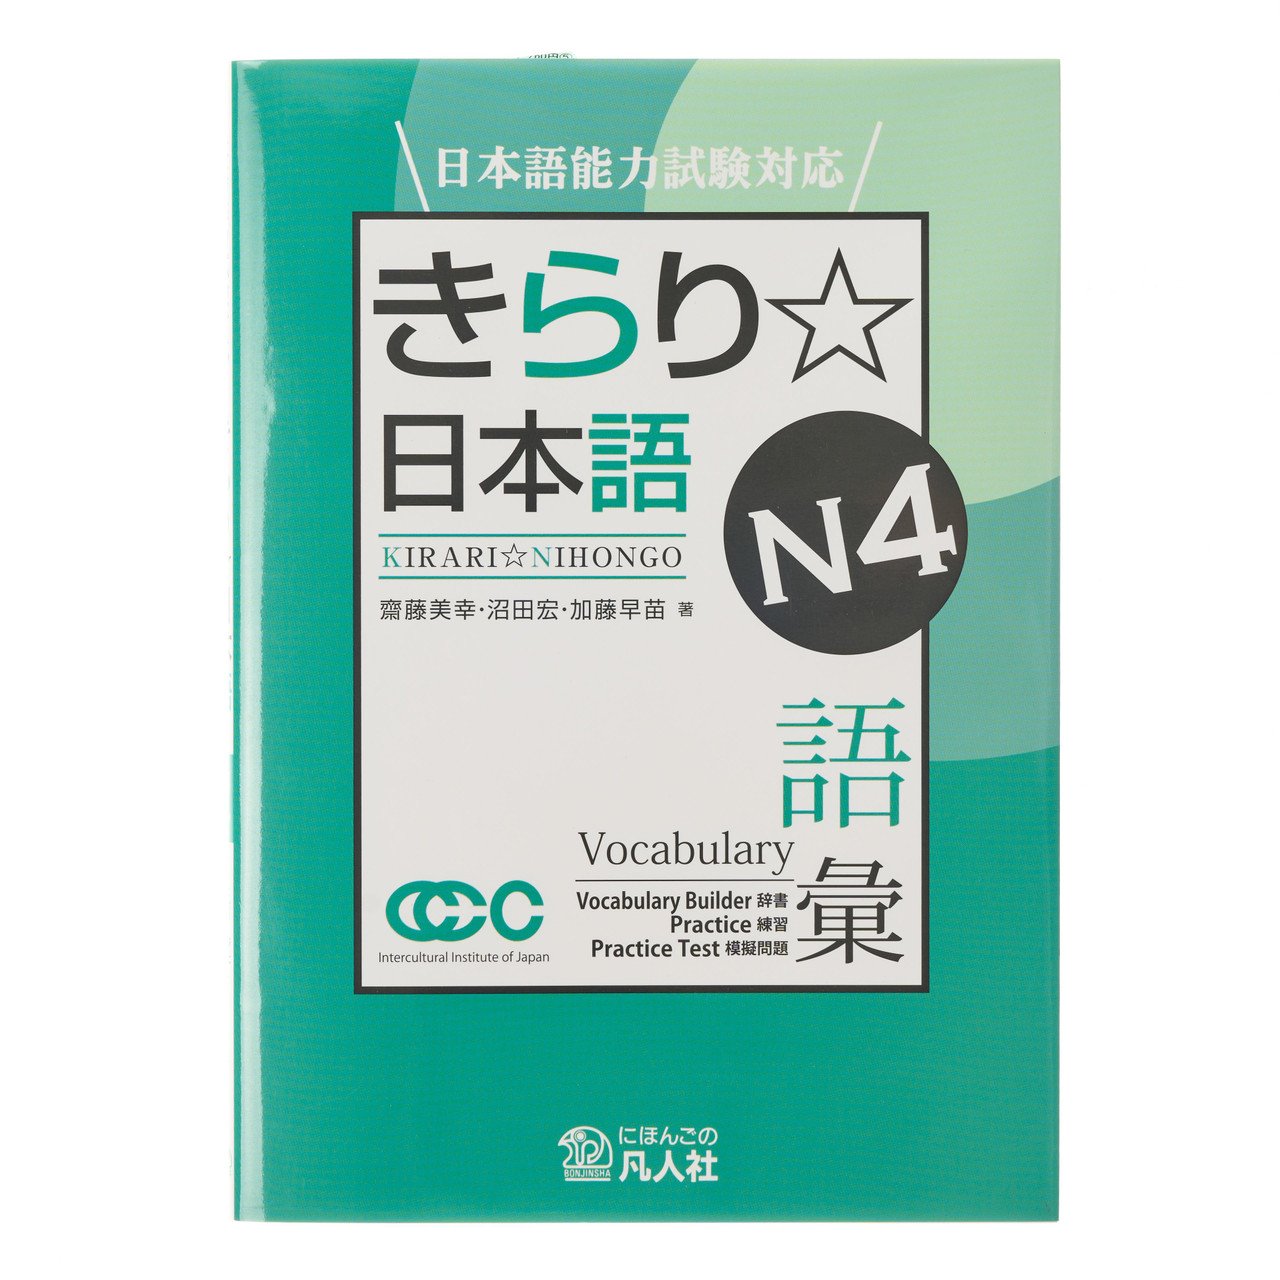 Kirari Nihongo N4 Vocabulary Support for the JLPT Book 350g